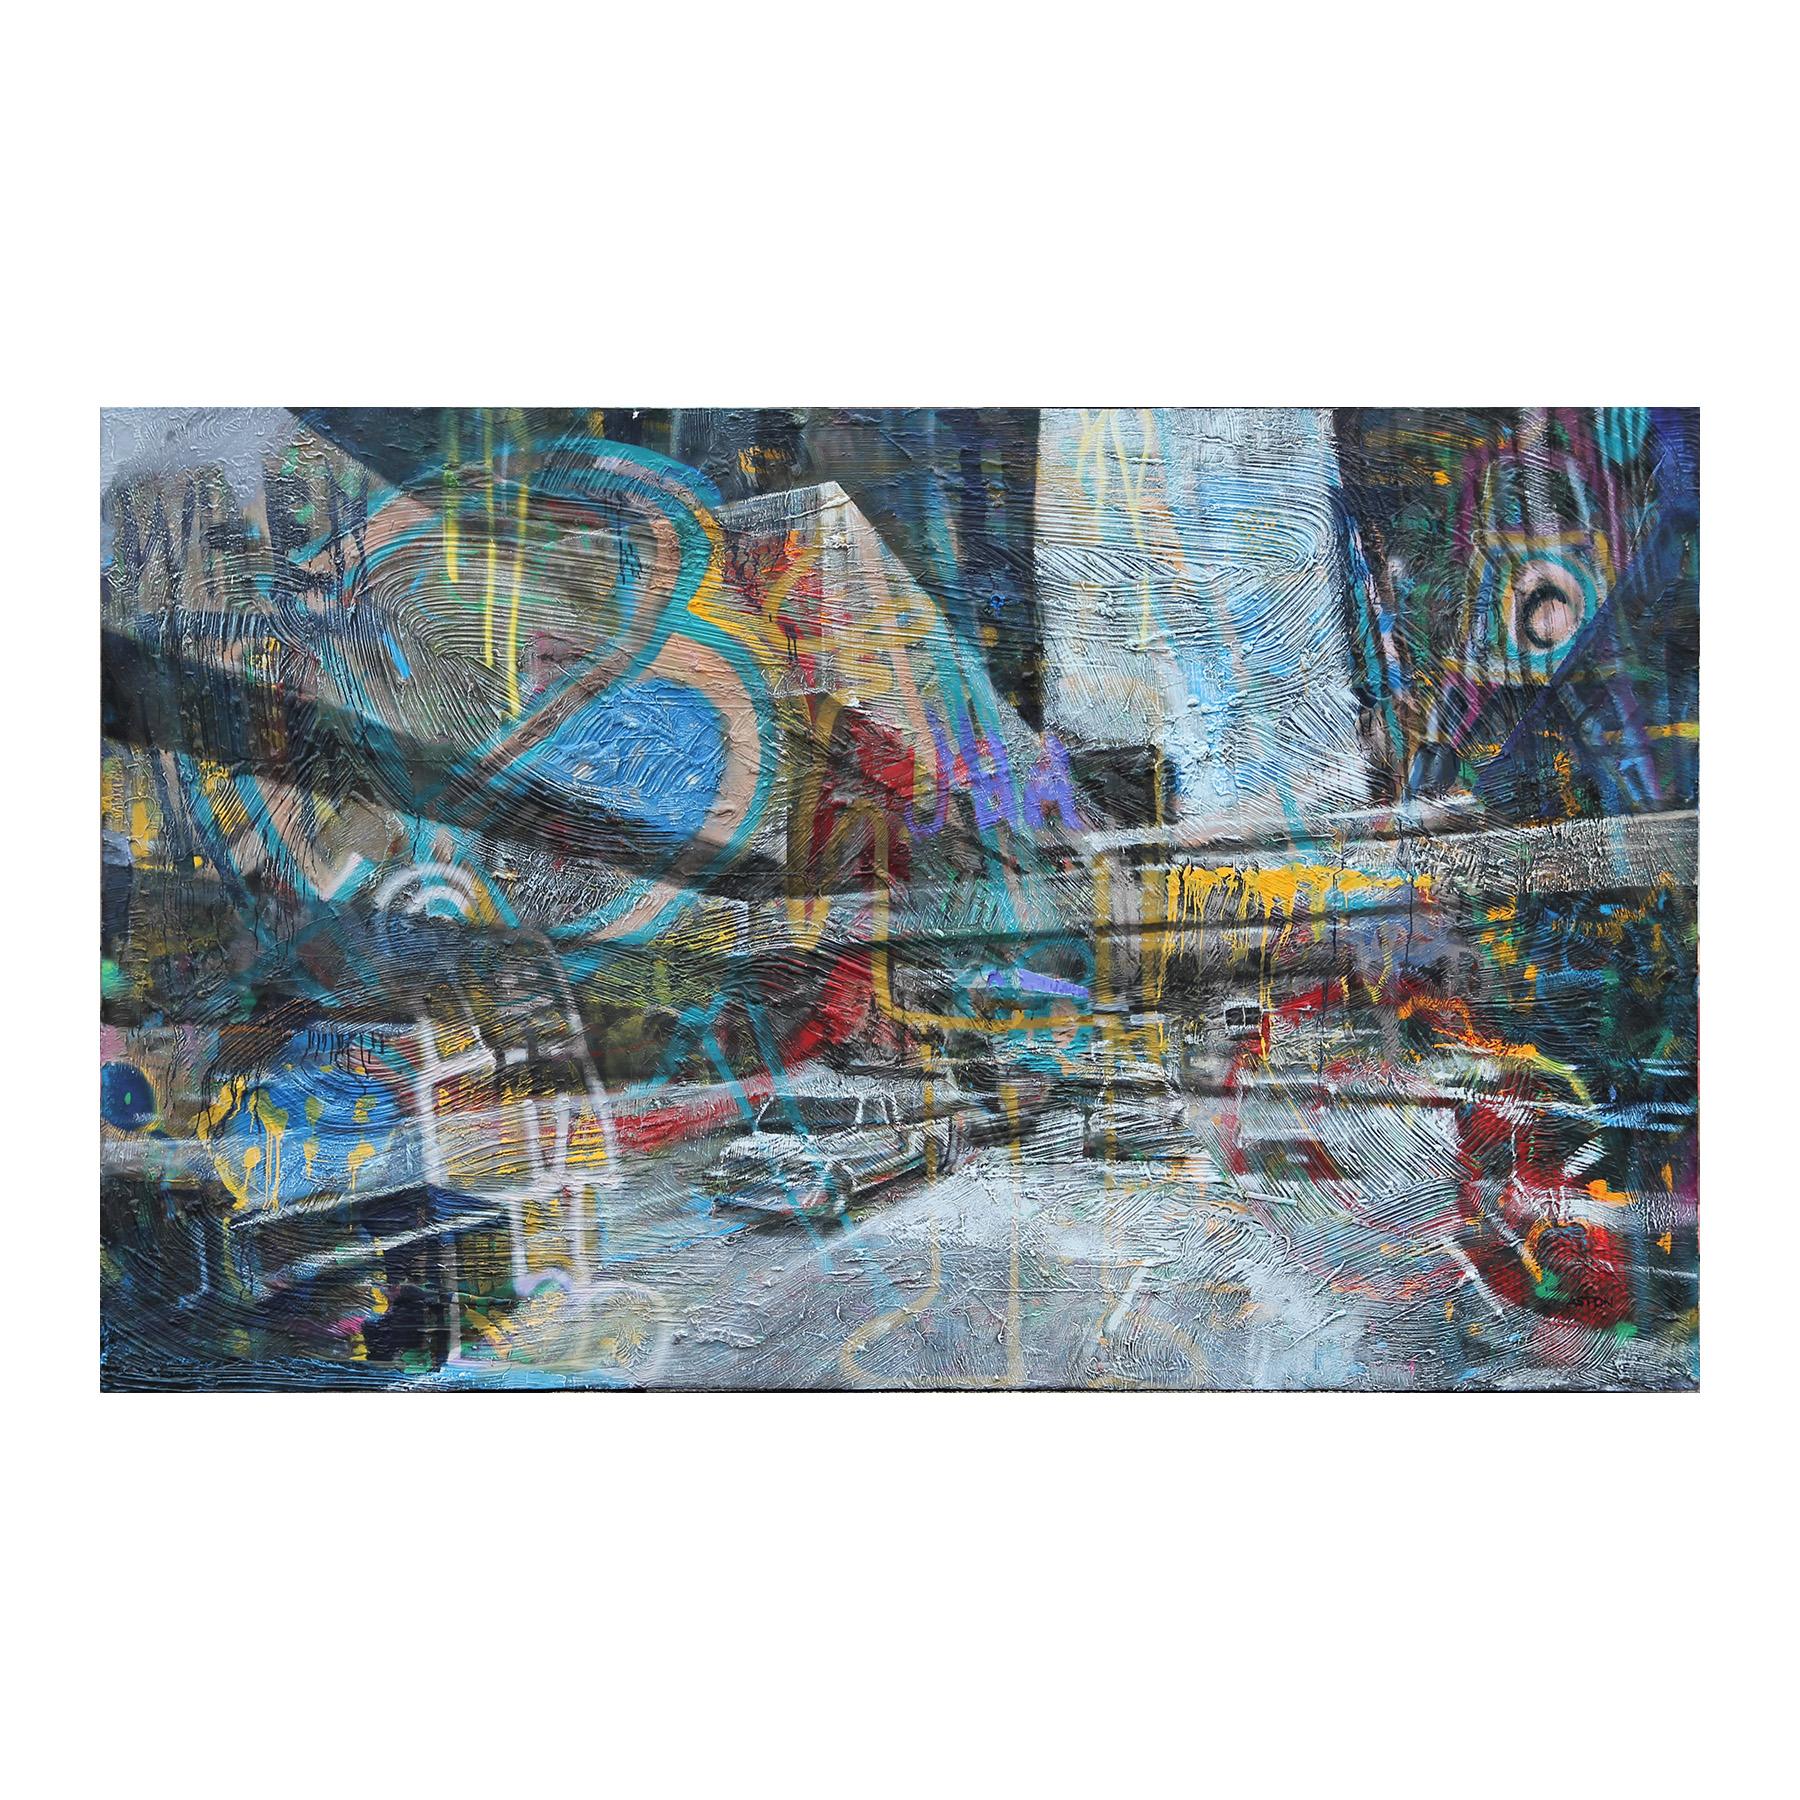 Matt Aston Abstract Painting - Colorful Large Abstract Graffiti Style Cityscape Splatter Painting on Canvas